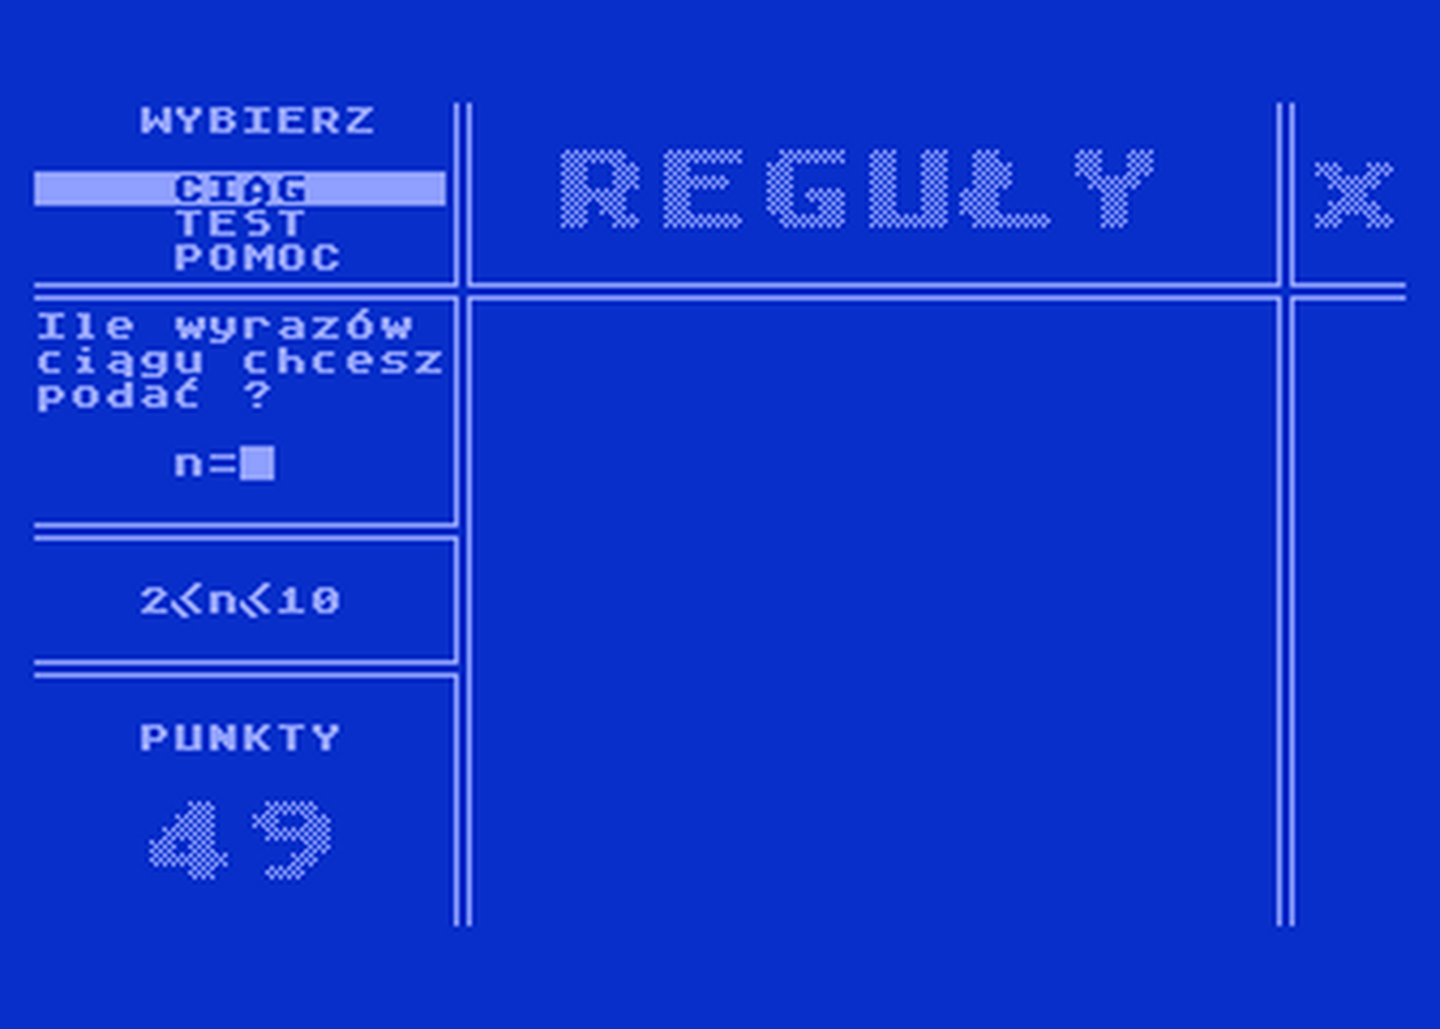 Atari GameBase Reguly (No_Publisher) 1989